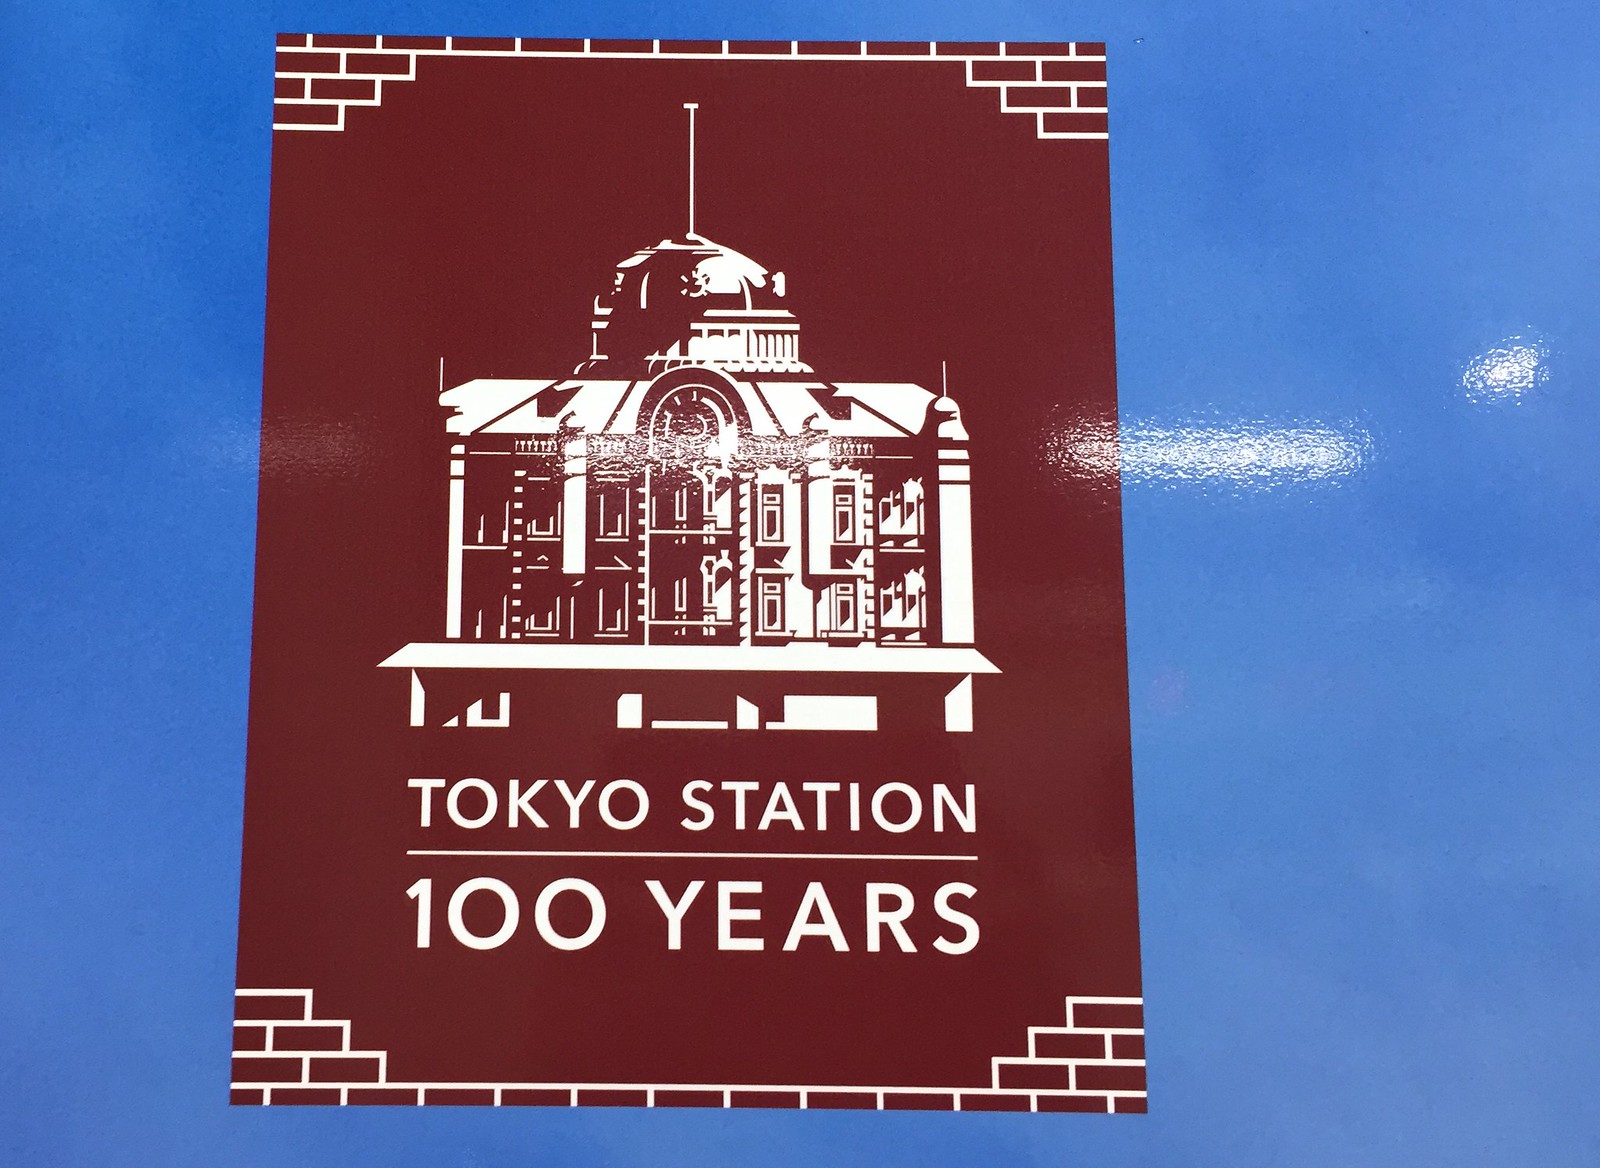 Yamanote Line Train in the 100 Year Tokyo Anniversary version